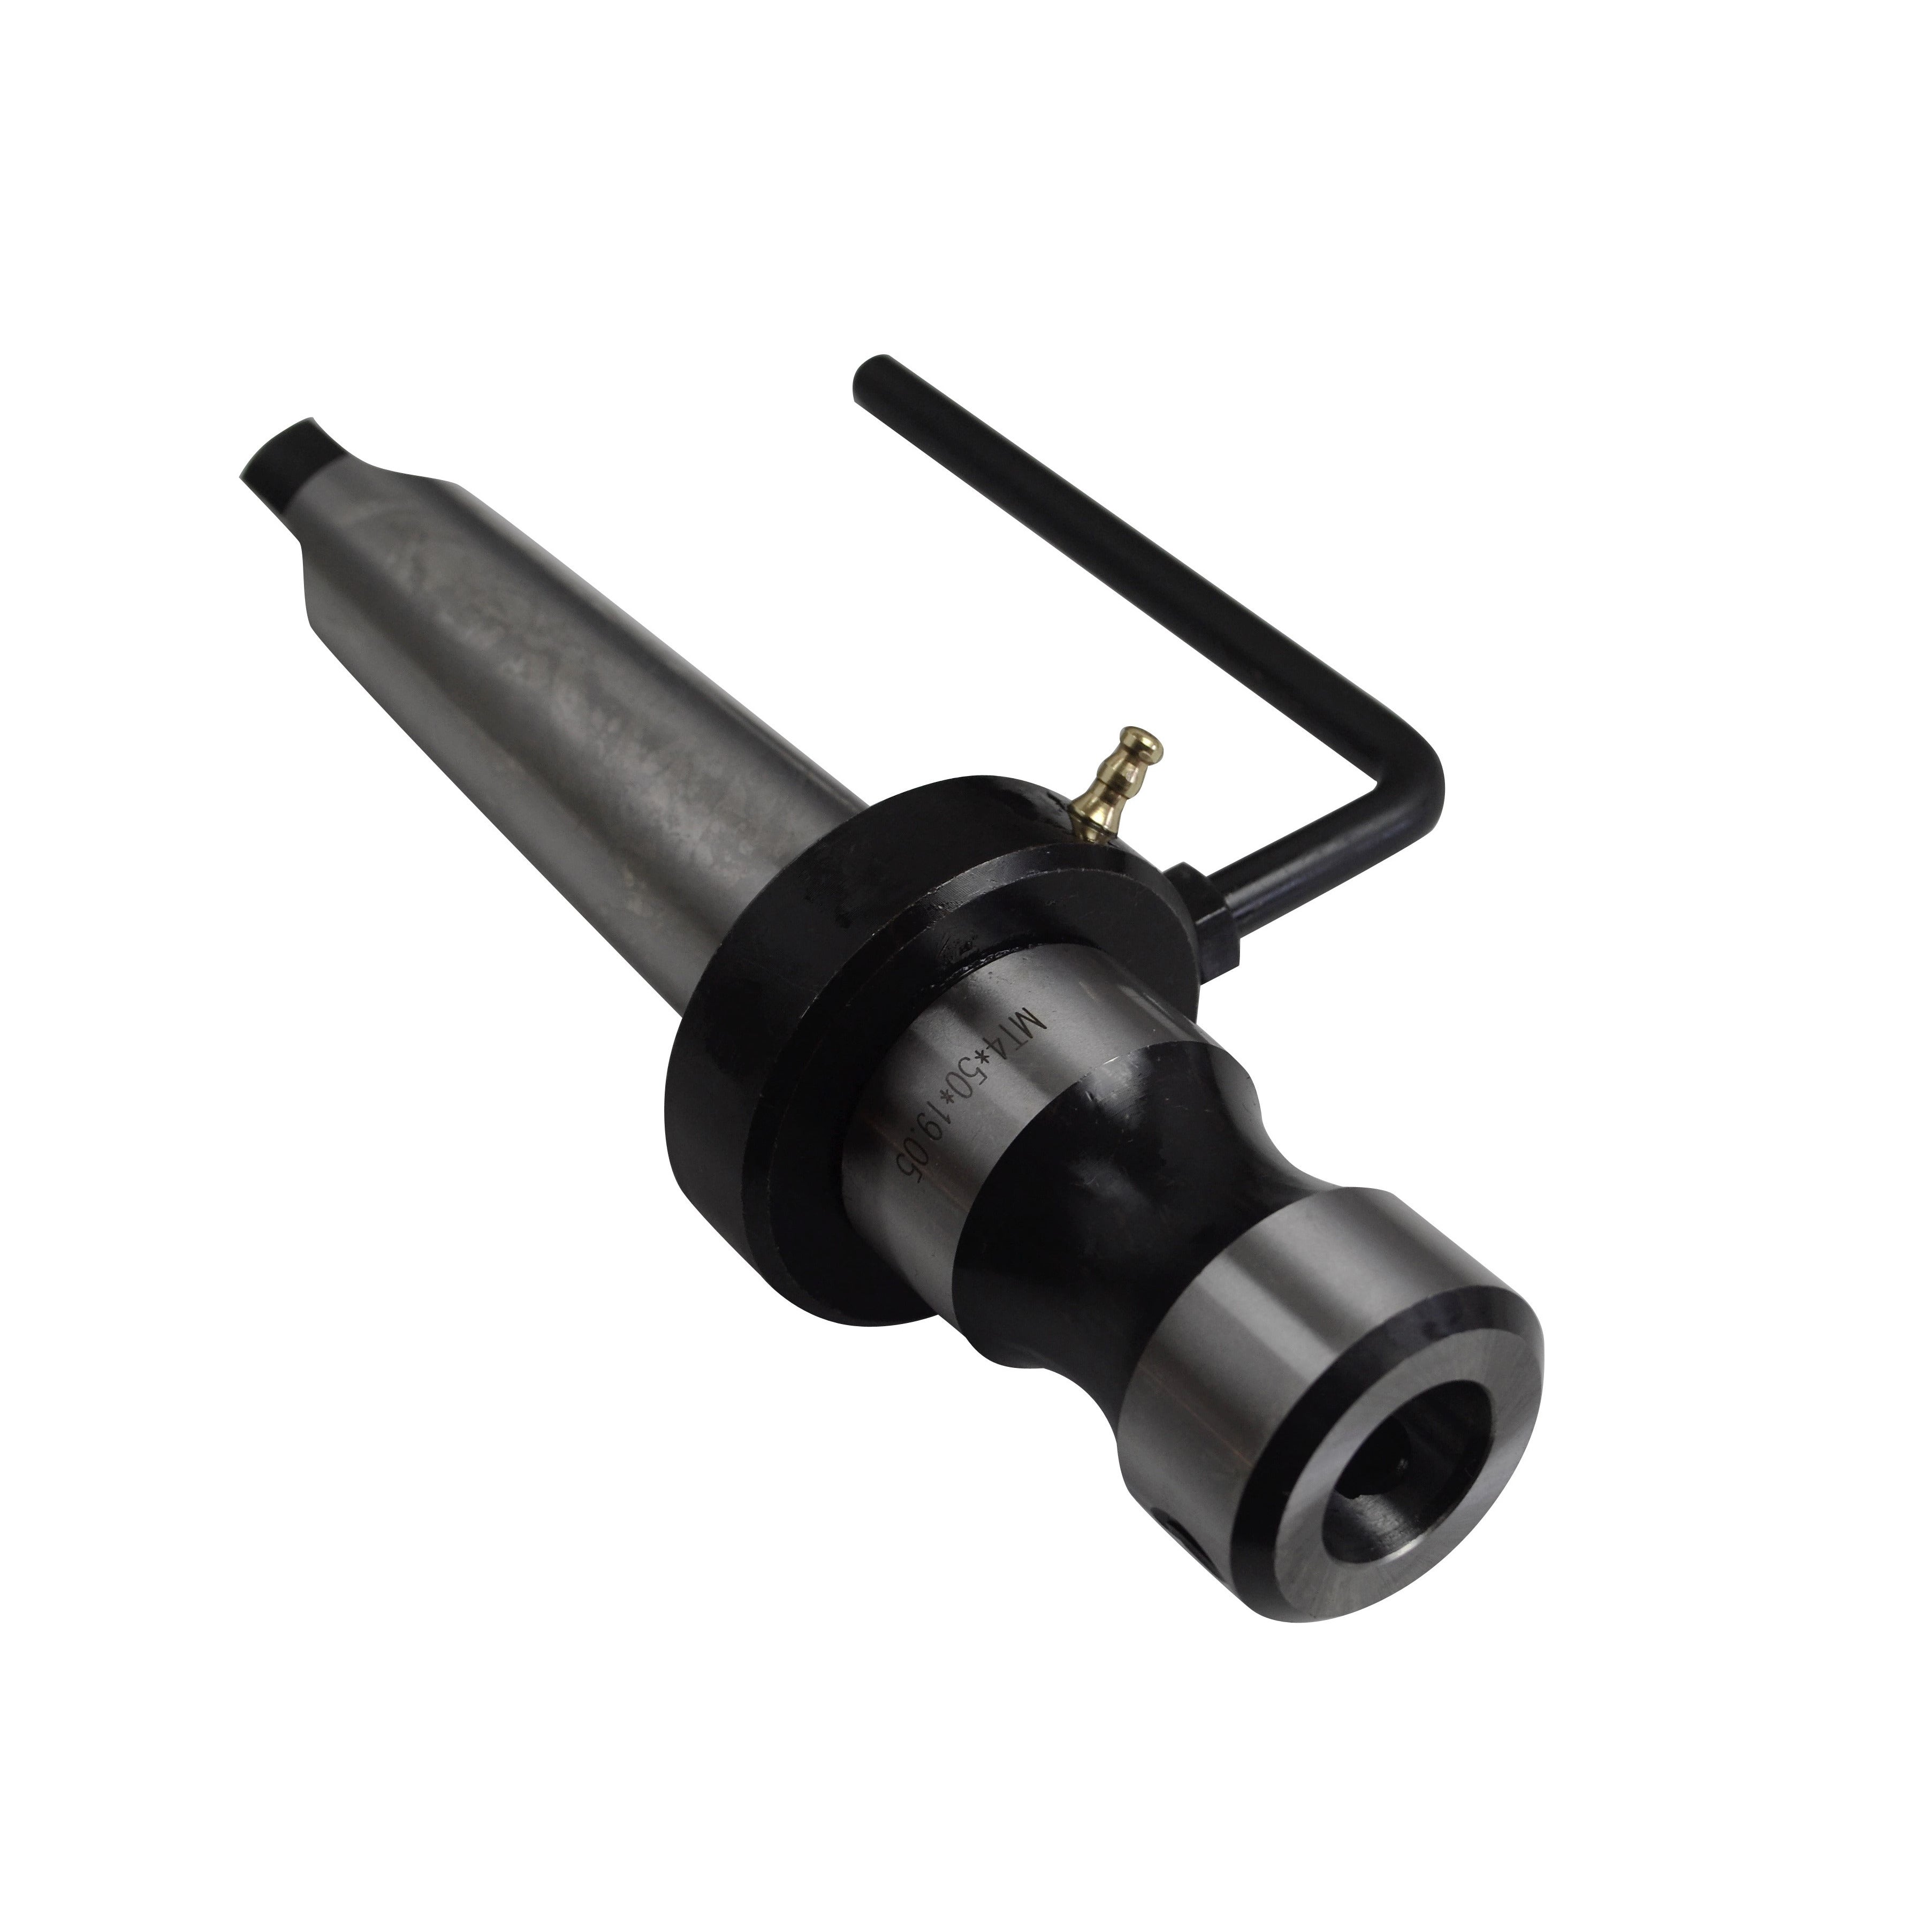 weldon holder 19mm 3/4 MT4 coolant port annular cutter adaptor morse 4 hardware drill bits parts industrial